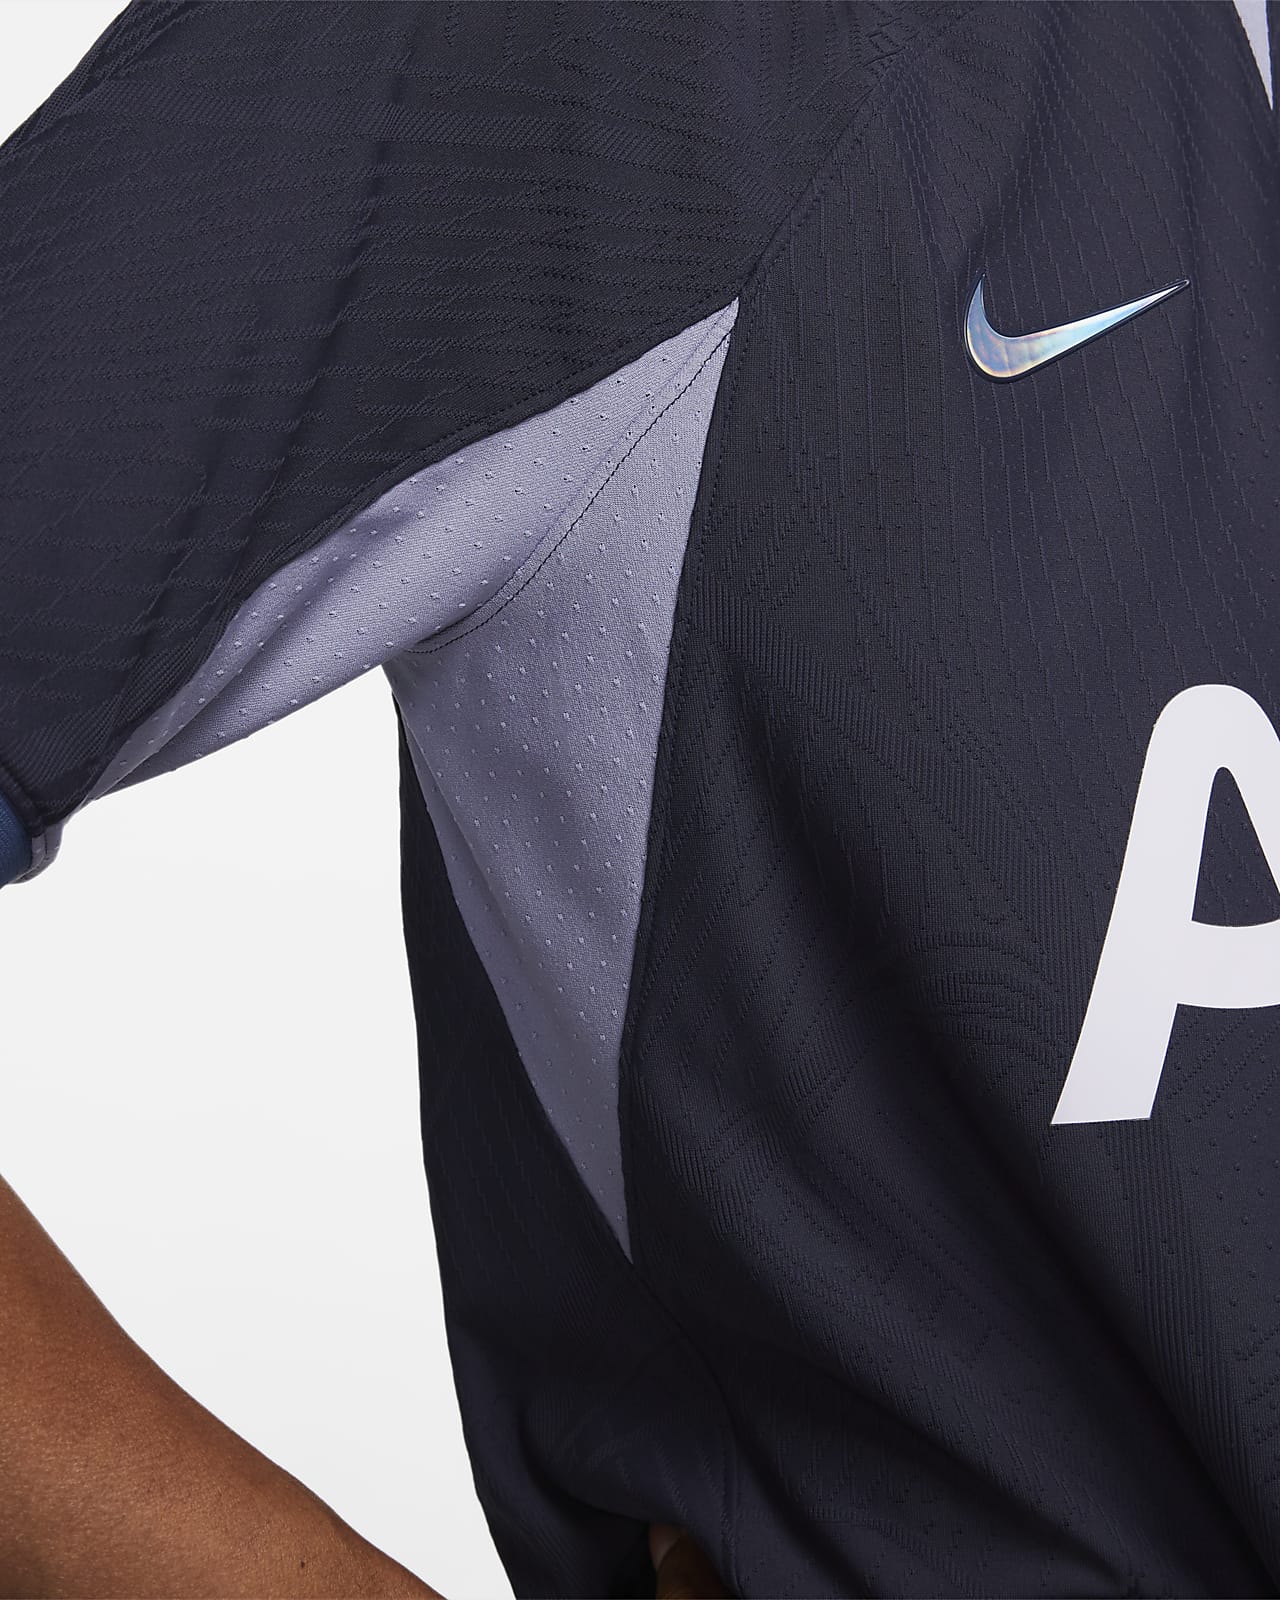 The Tottenham Hotspur 2023/24 Away shirt brings that N17 street